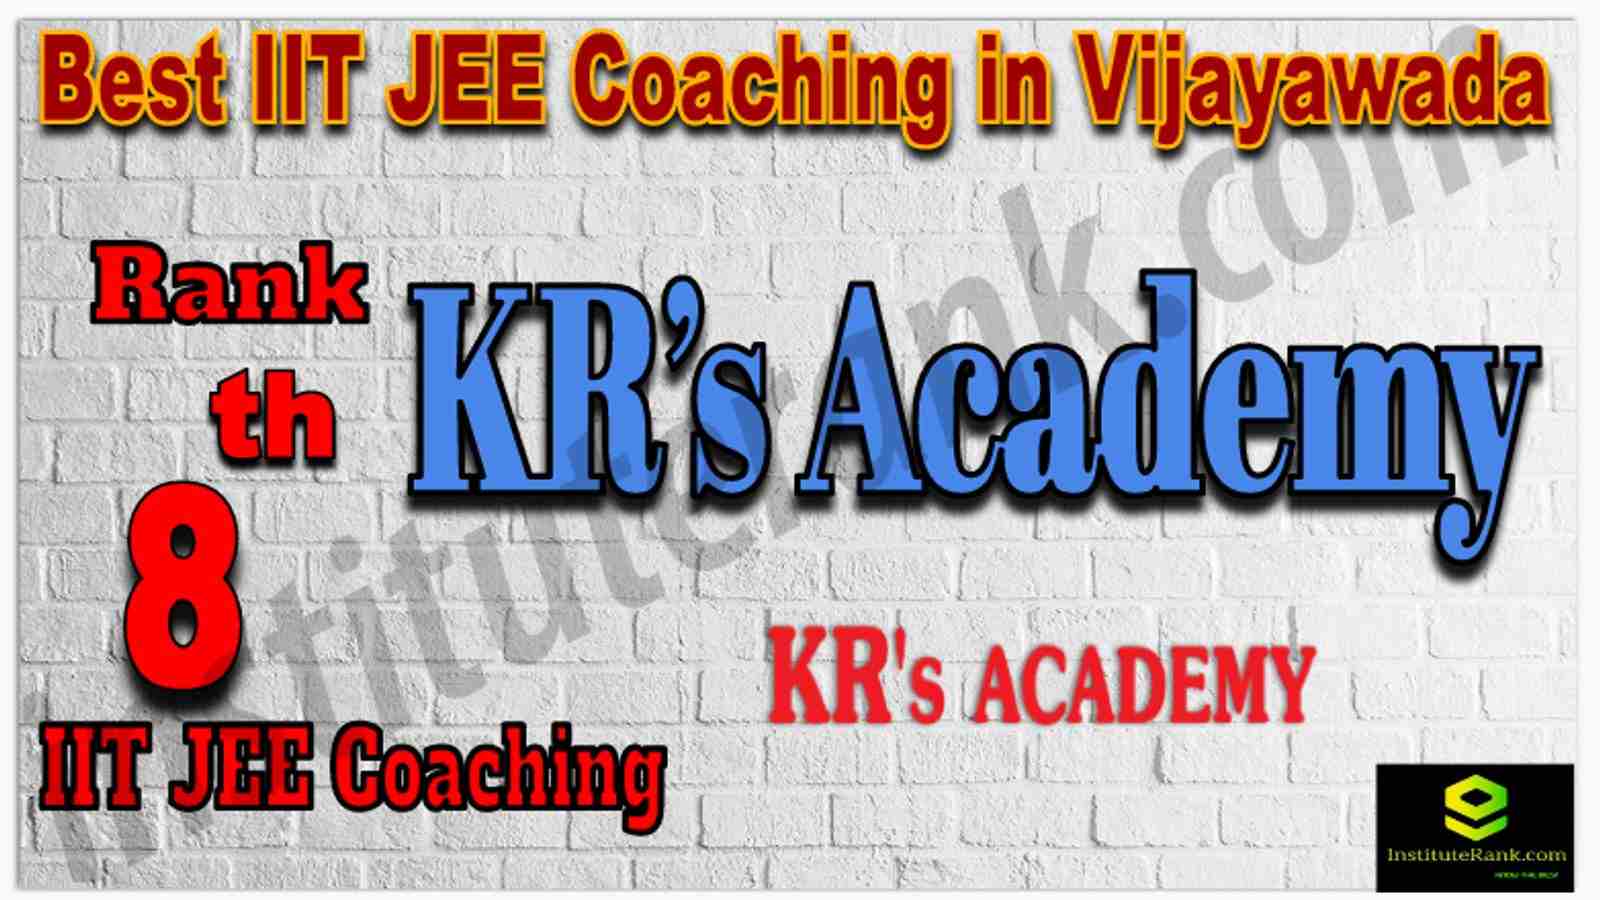 Rank 8th Best IIT JEE Coaching in Vijayawada